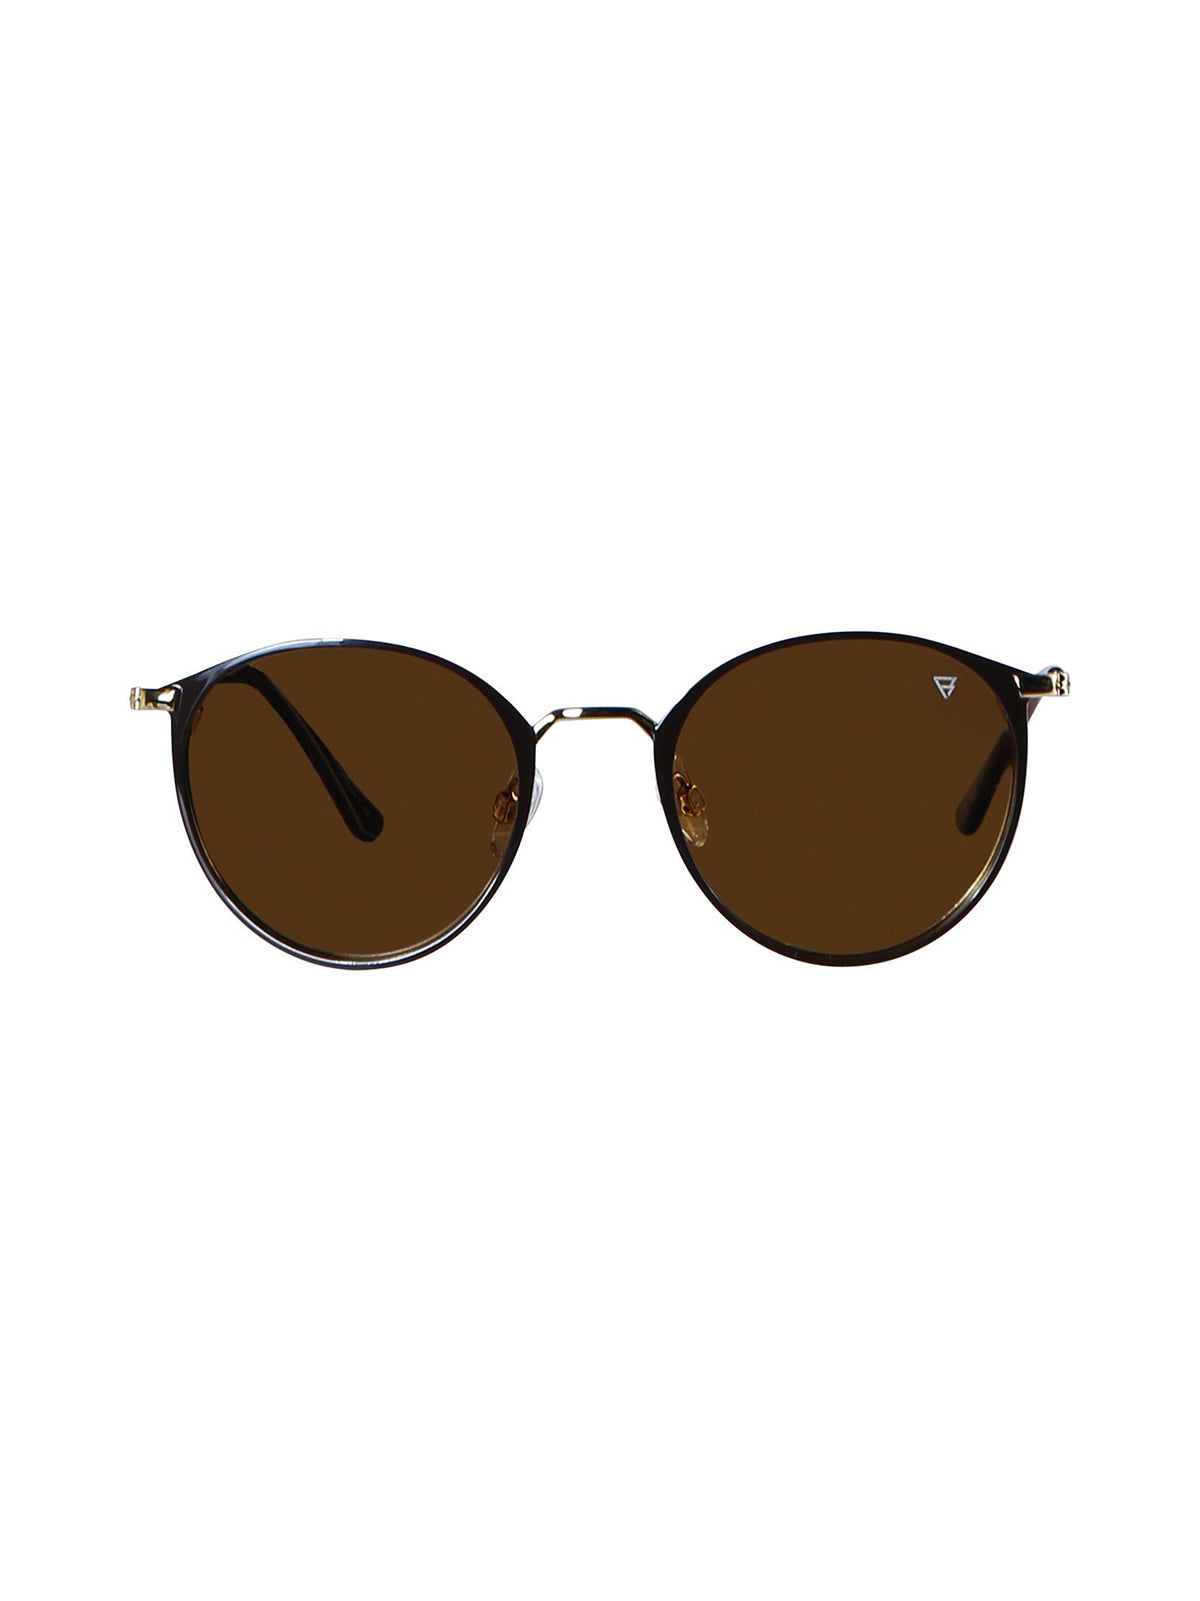 Huron 2 Women Sunglasses | Brown